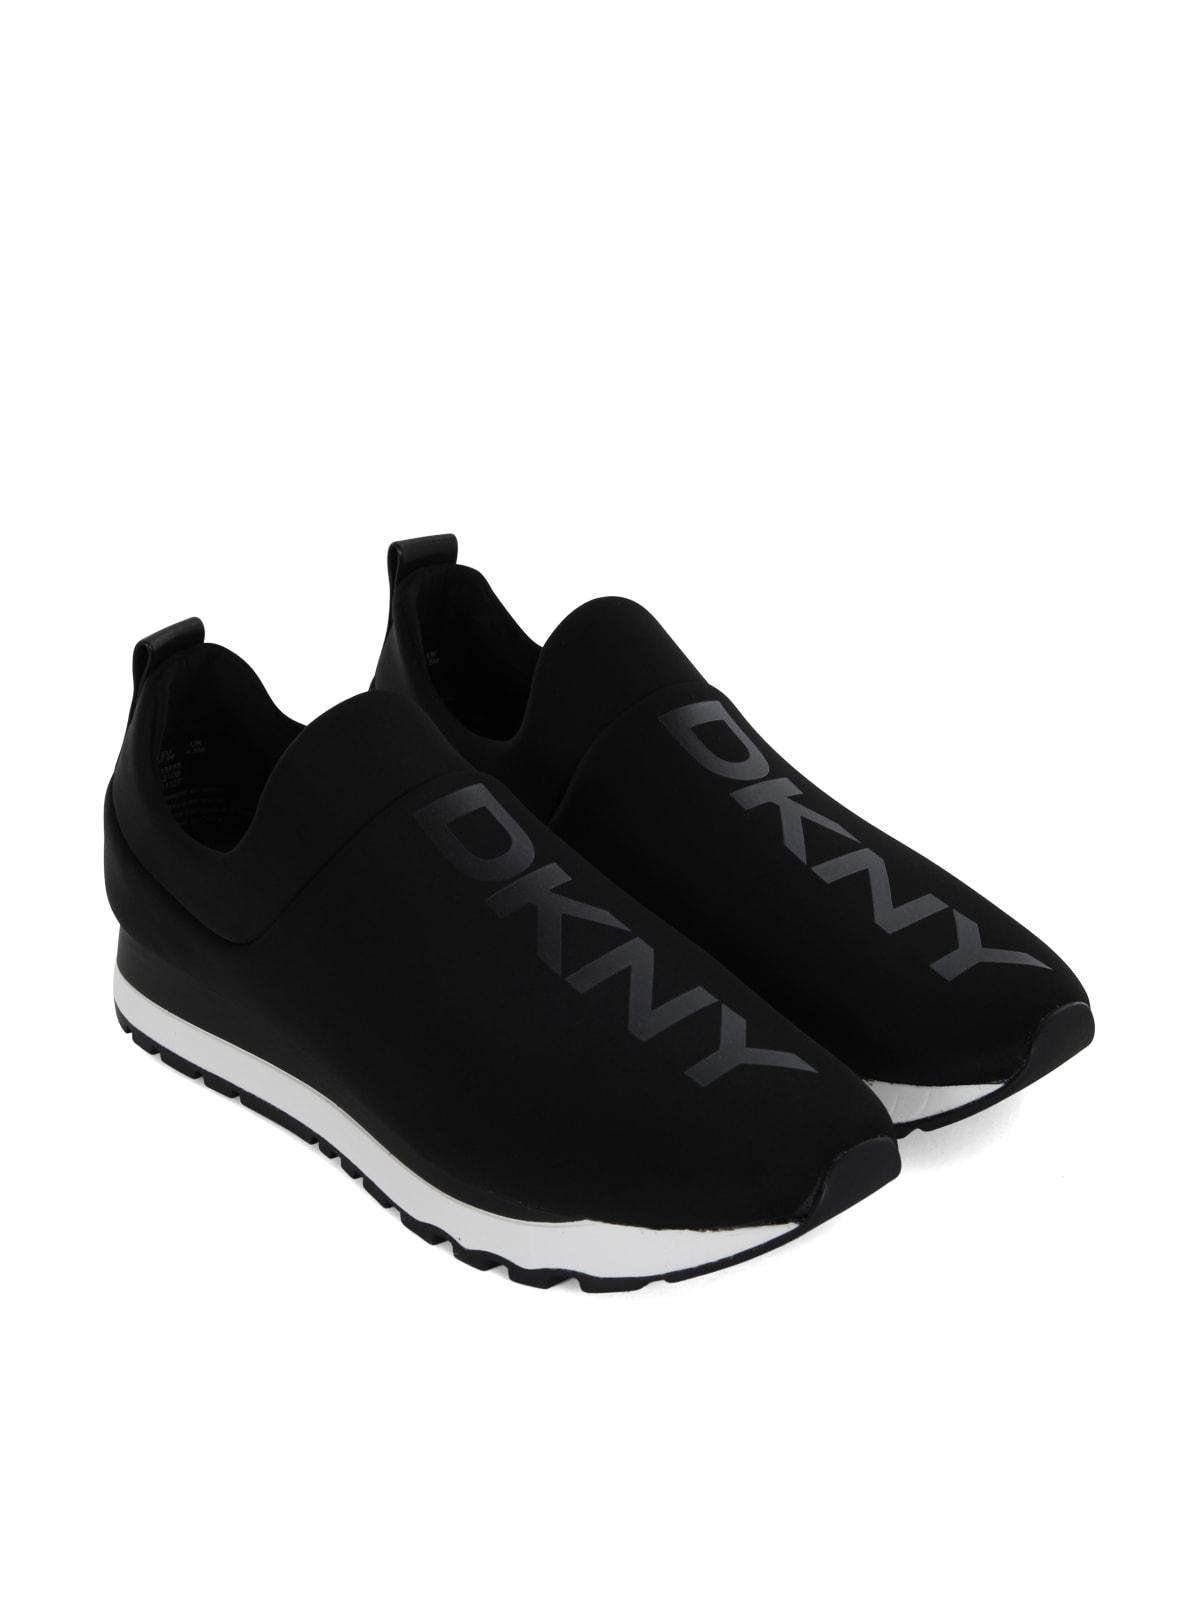 DKNY Jadyn Slip On Jogger in Black | Lyst